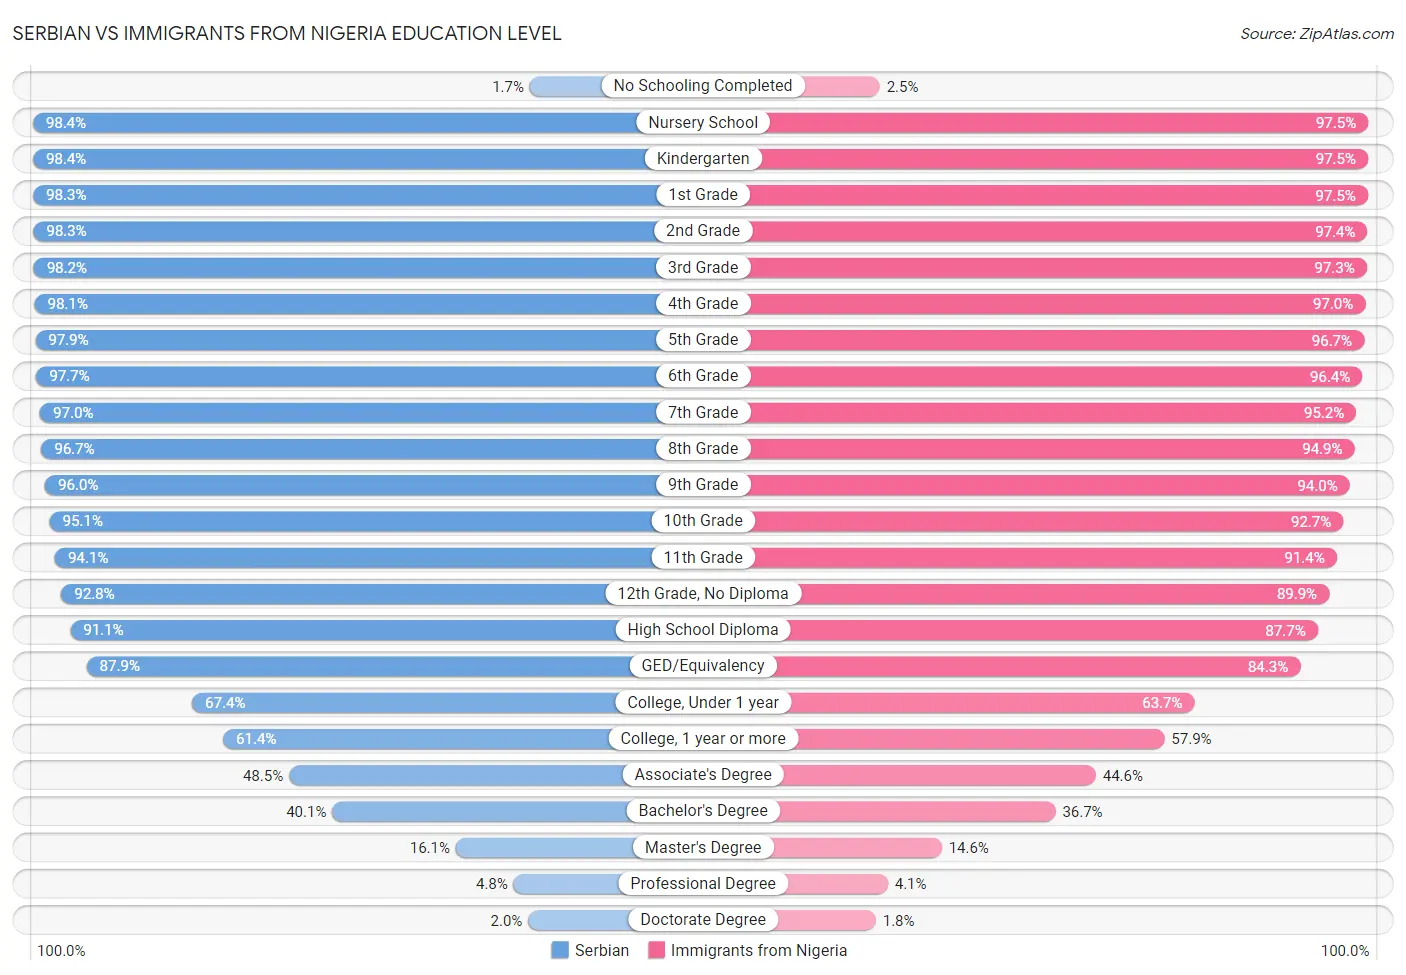 Serbian vs Immigrants from Nigeria Education Level